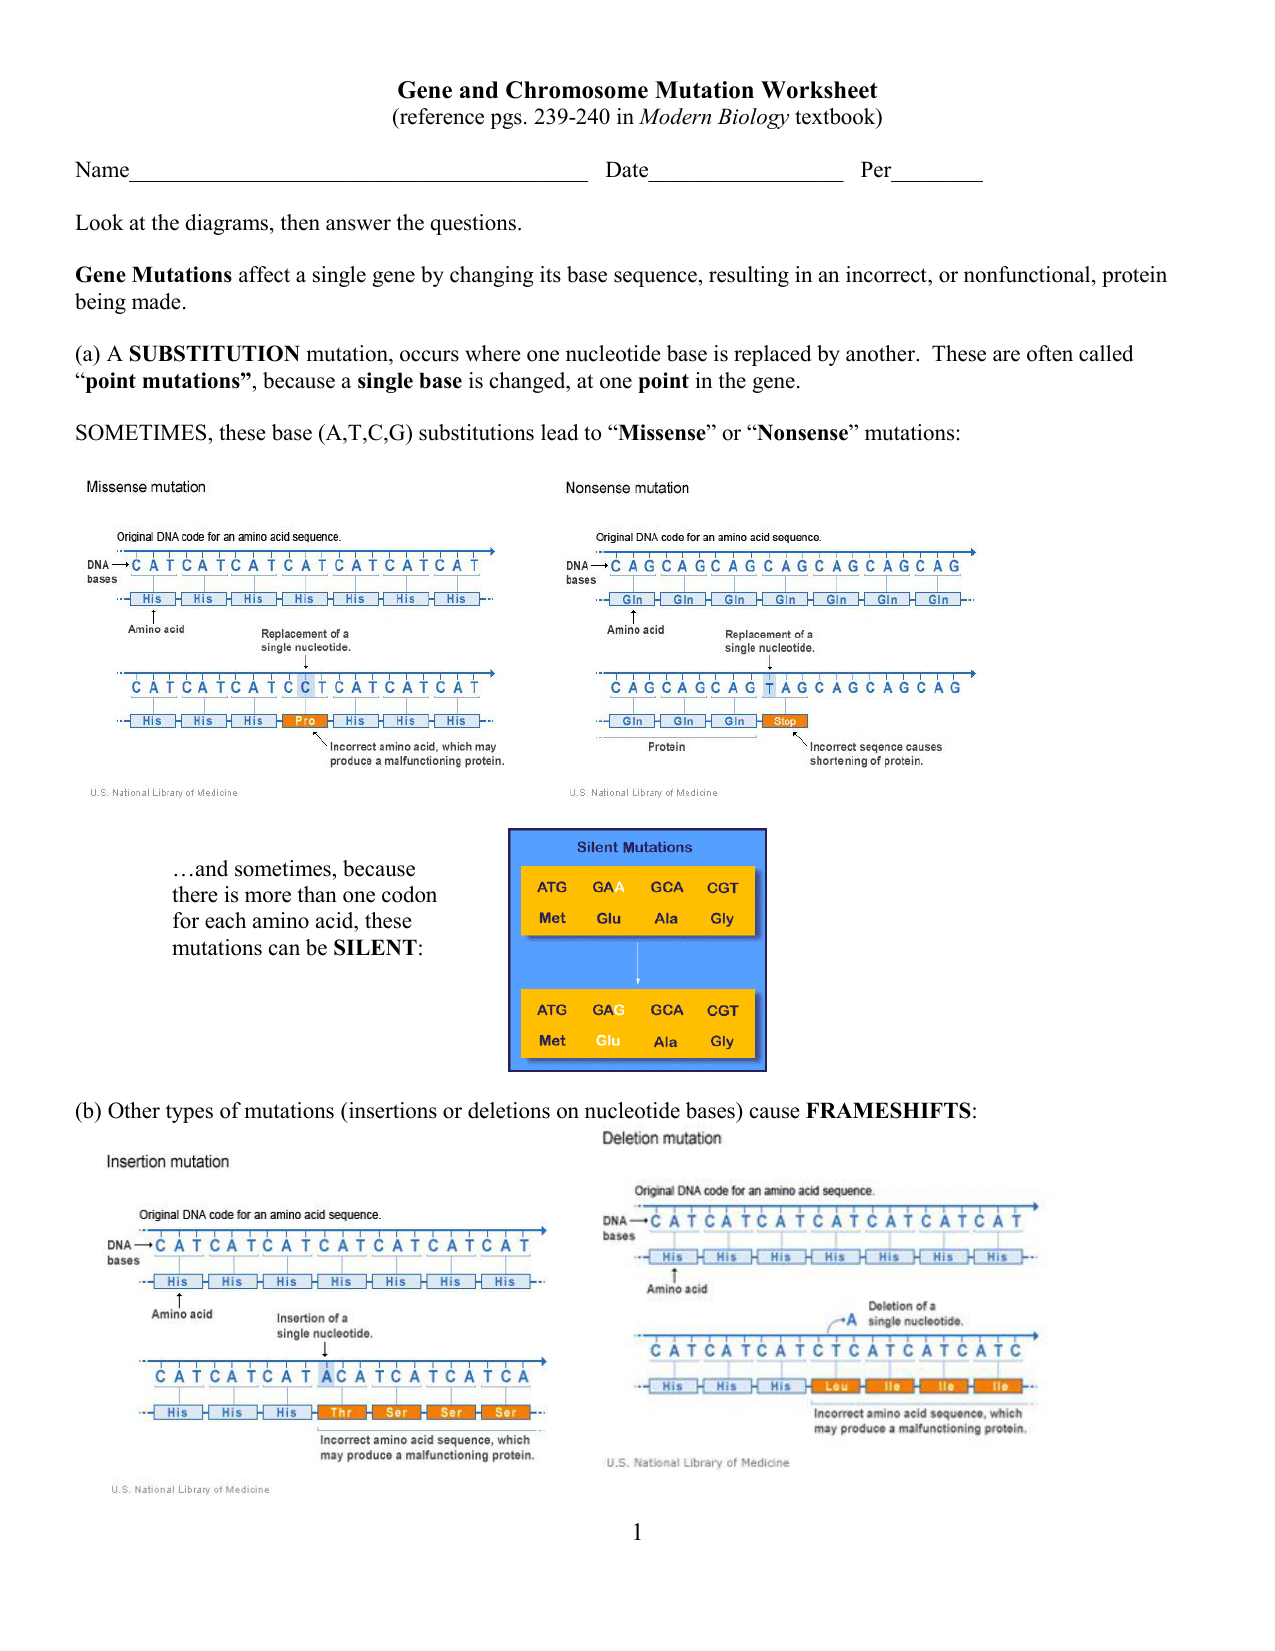 Genetic Mutation Worksheet - Westgate Mennonite Collegiate With Gene And Chromosome Mutation Worksheet